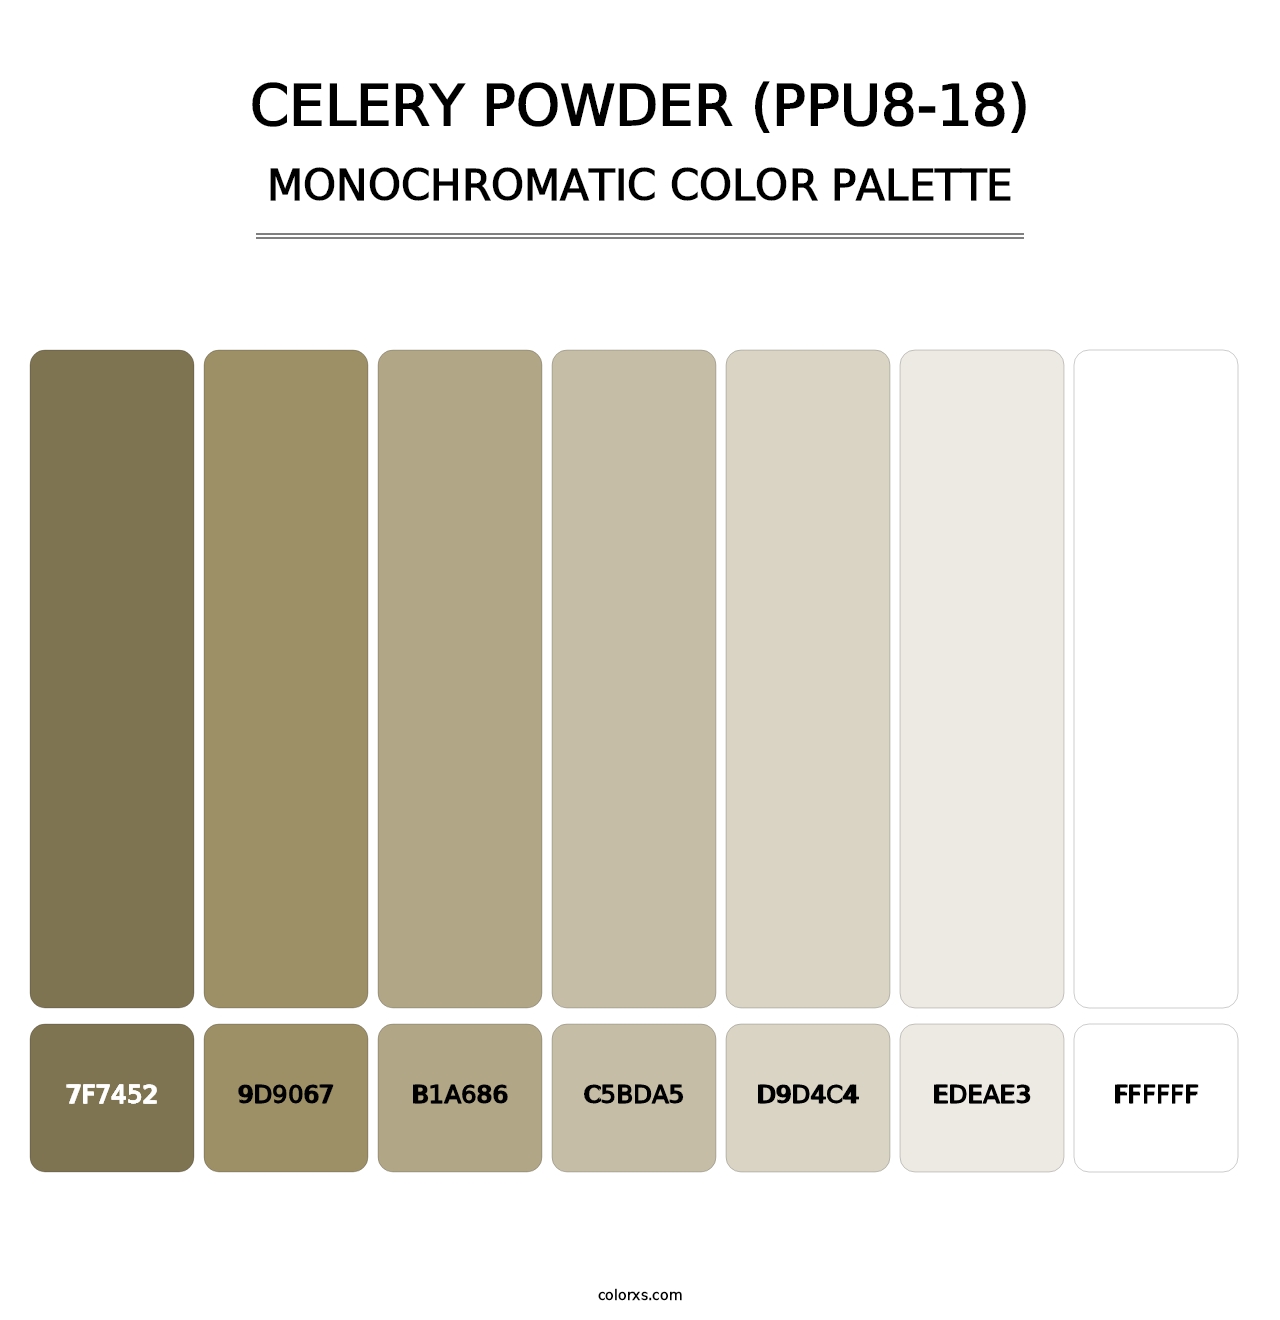 Celery Powder (PPU8-18) - Monochromatic Color Palette